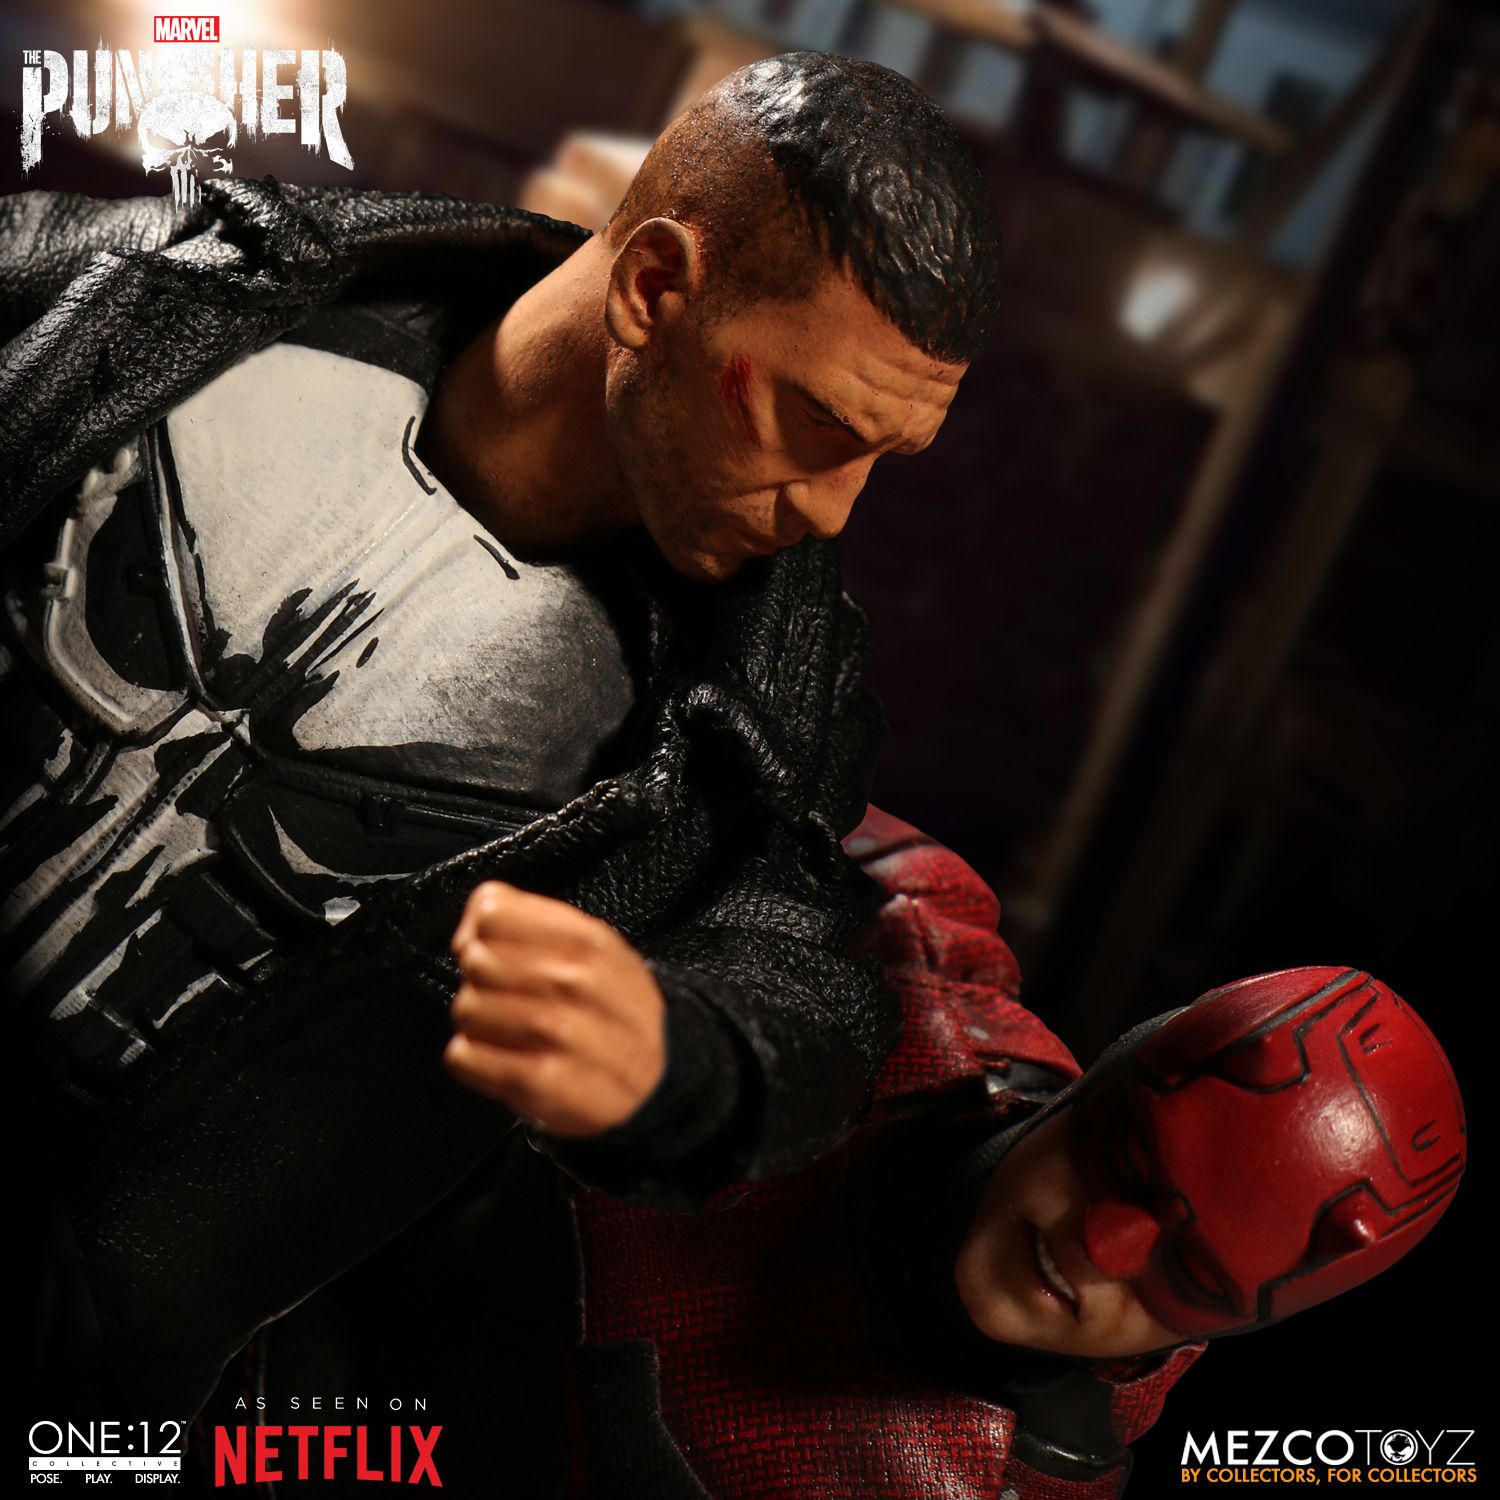 Mezco - One:12 Collective - Marvel - Punisher - Marvelous Toys